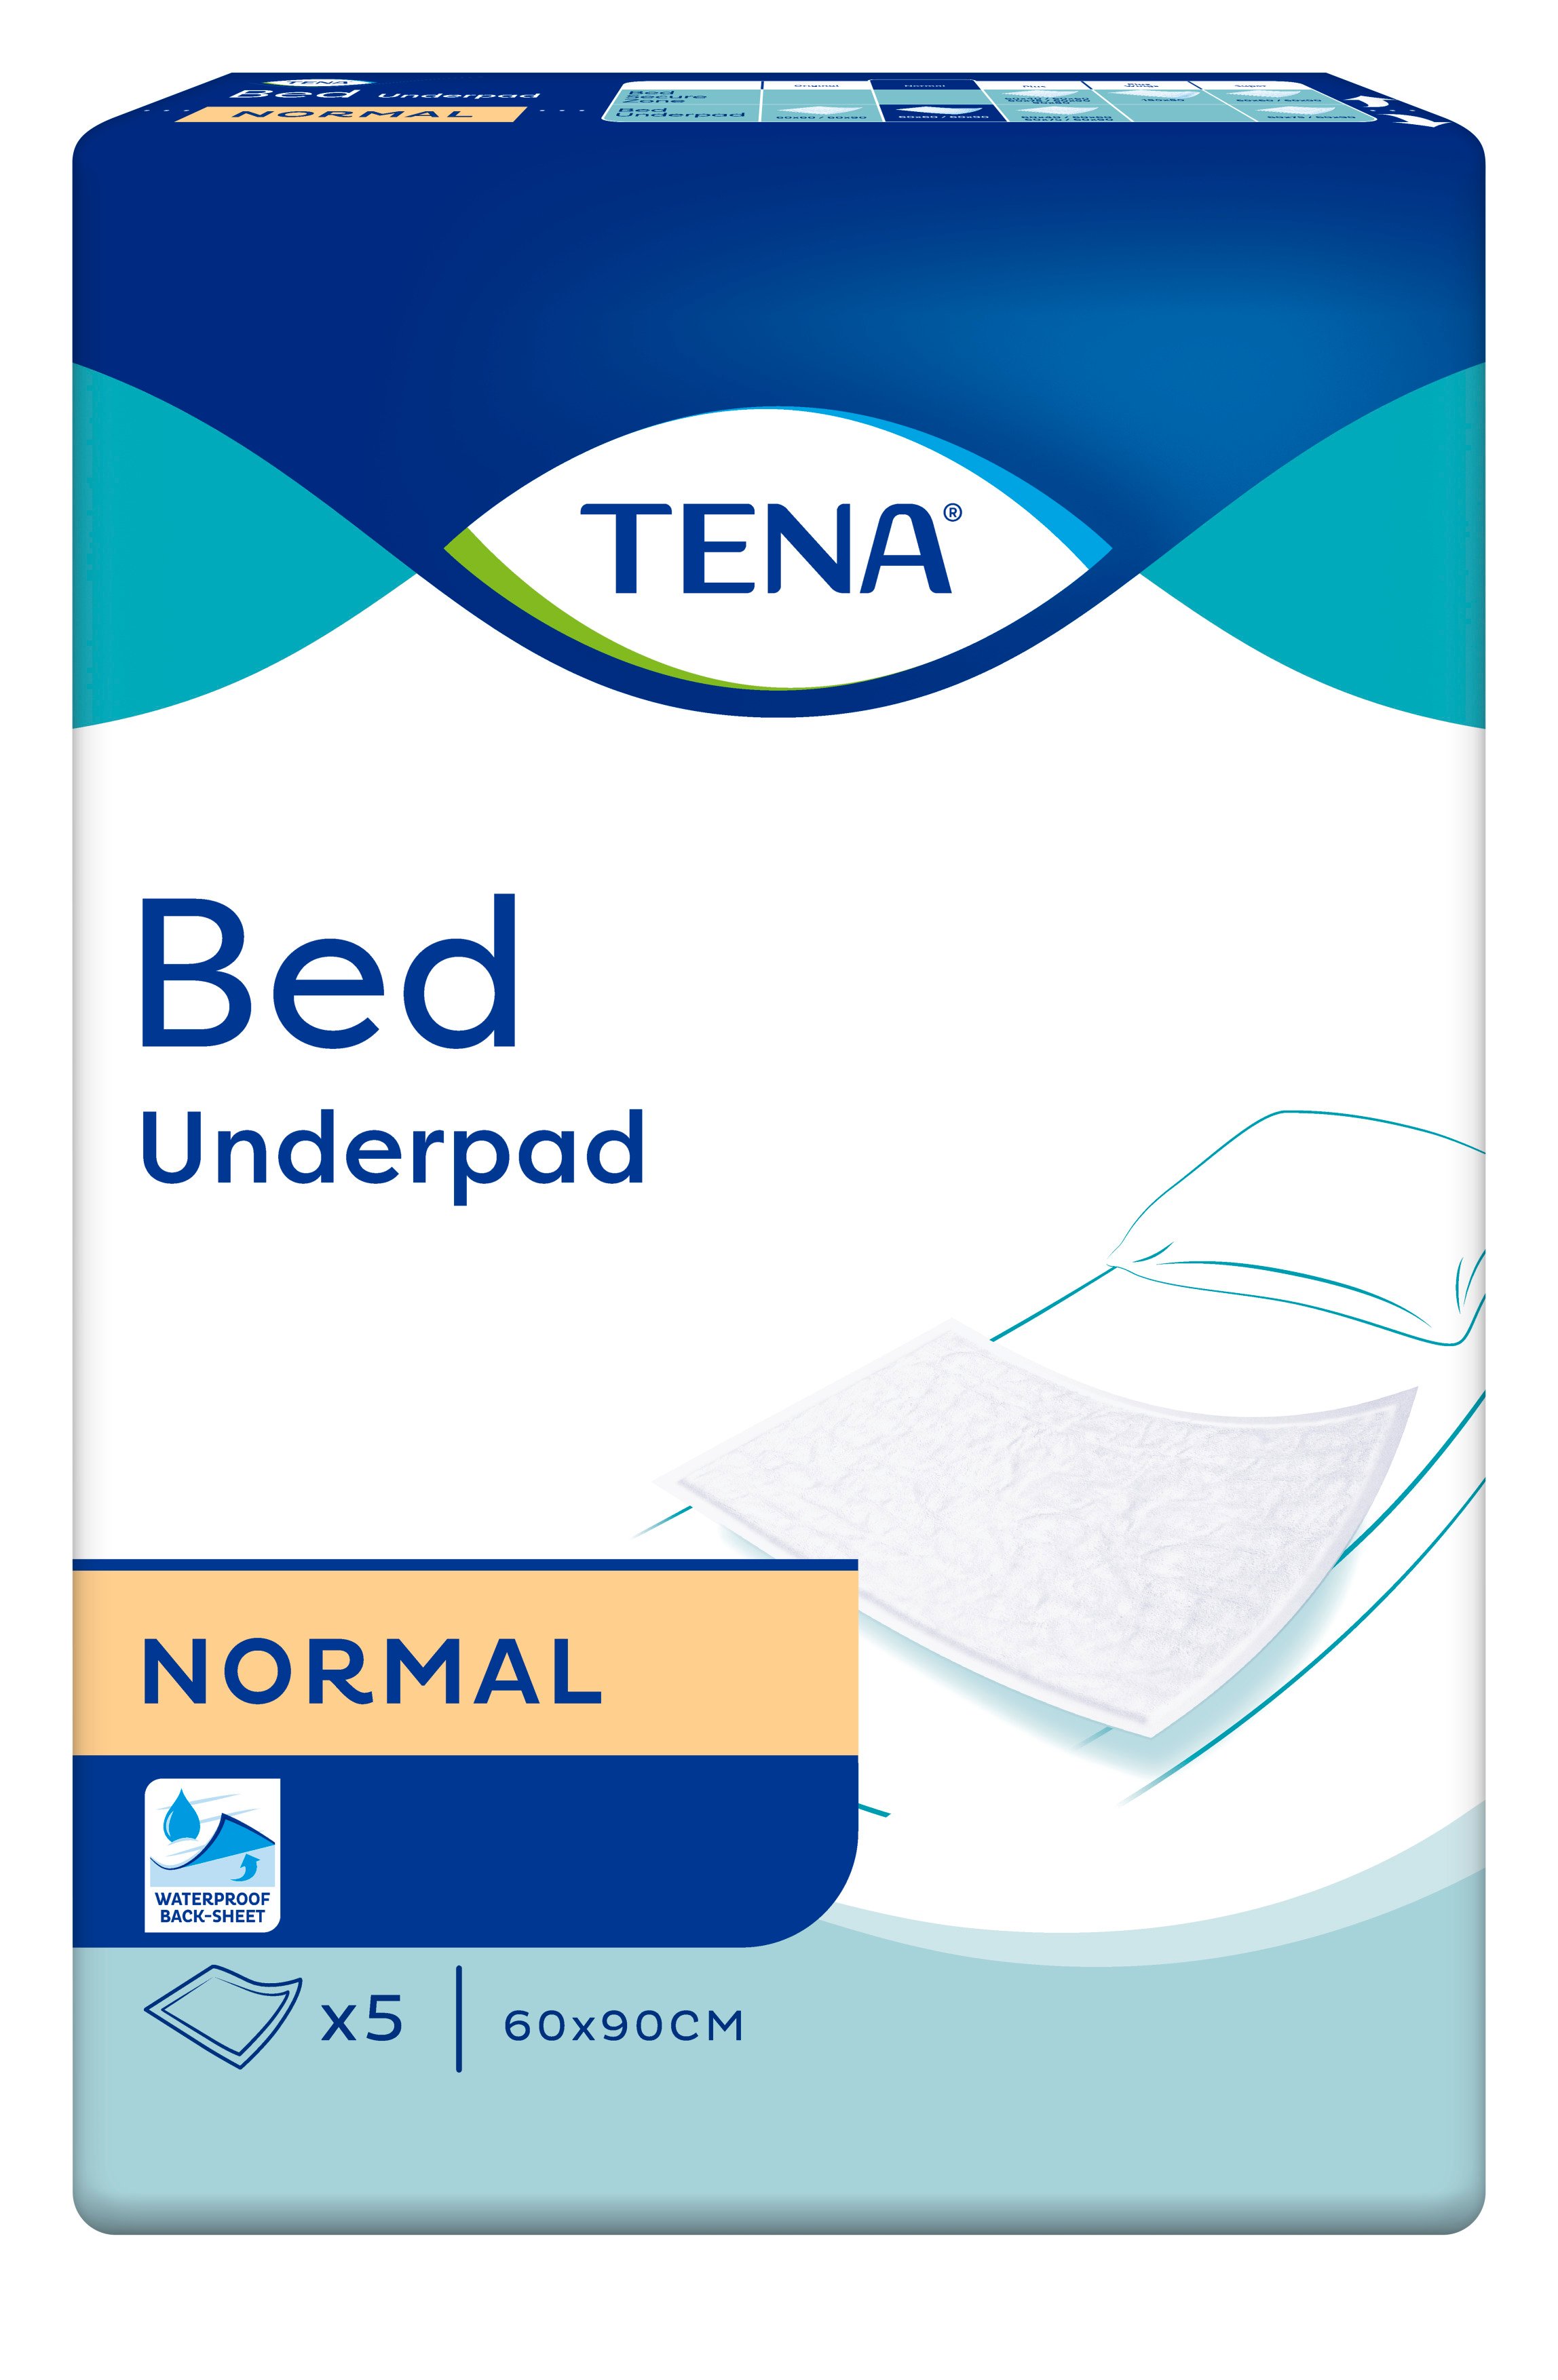 Одноразовые пеленки Tena Bed Normal, 90x60 см, 5 шт. - фото 2